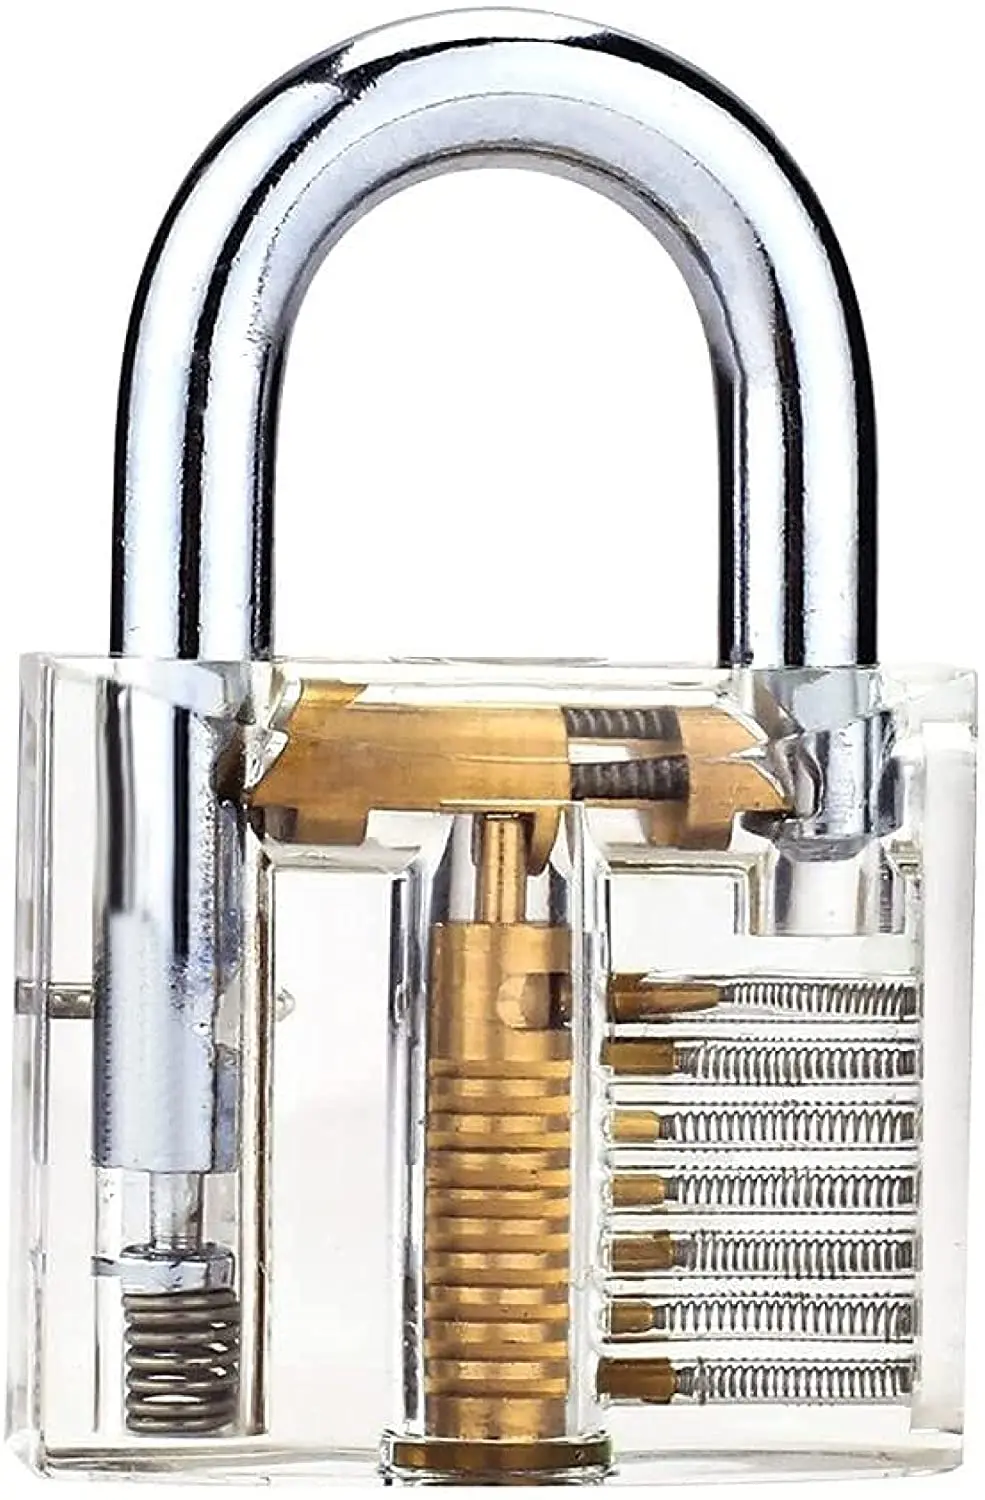 

1pcs Transparent Lock Opener Set with 15pcs Black Bag Tools, Broken Key Remove Pick Tools,Lock Training Set